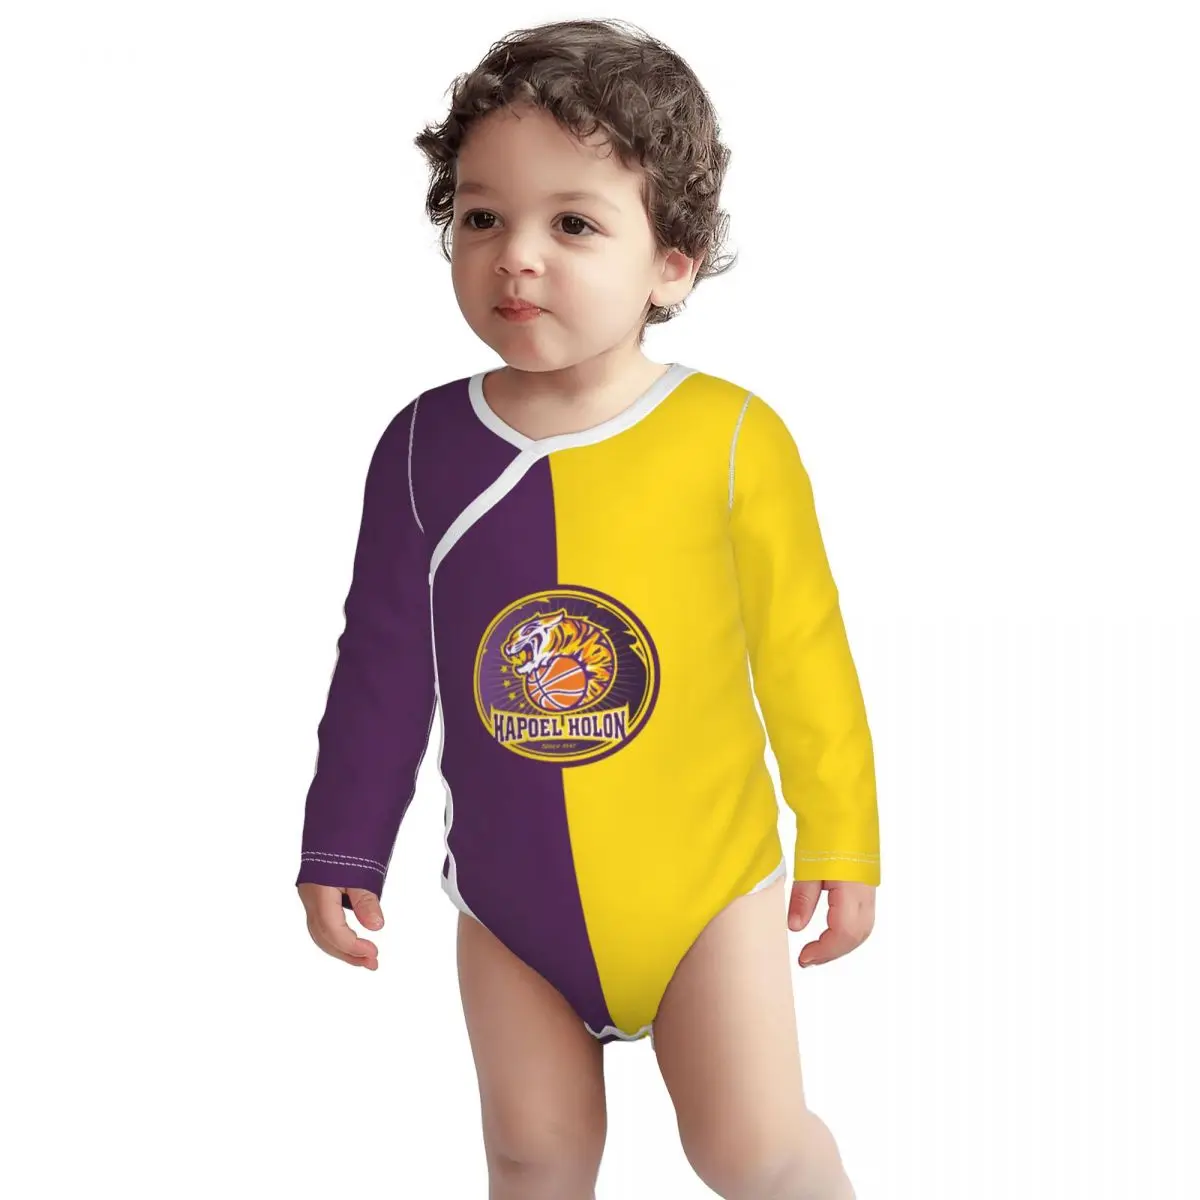 

Israel Hapoel Holon Bc Unisex Toddlers and Babies' Soft Thermal Long Sleeve Onesies Bodysuits Baby Romper